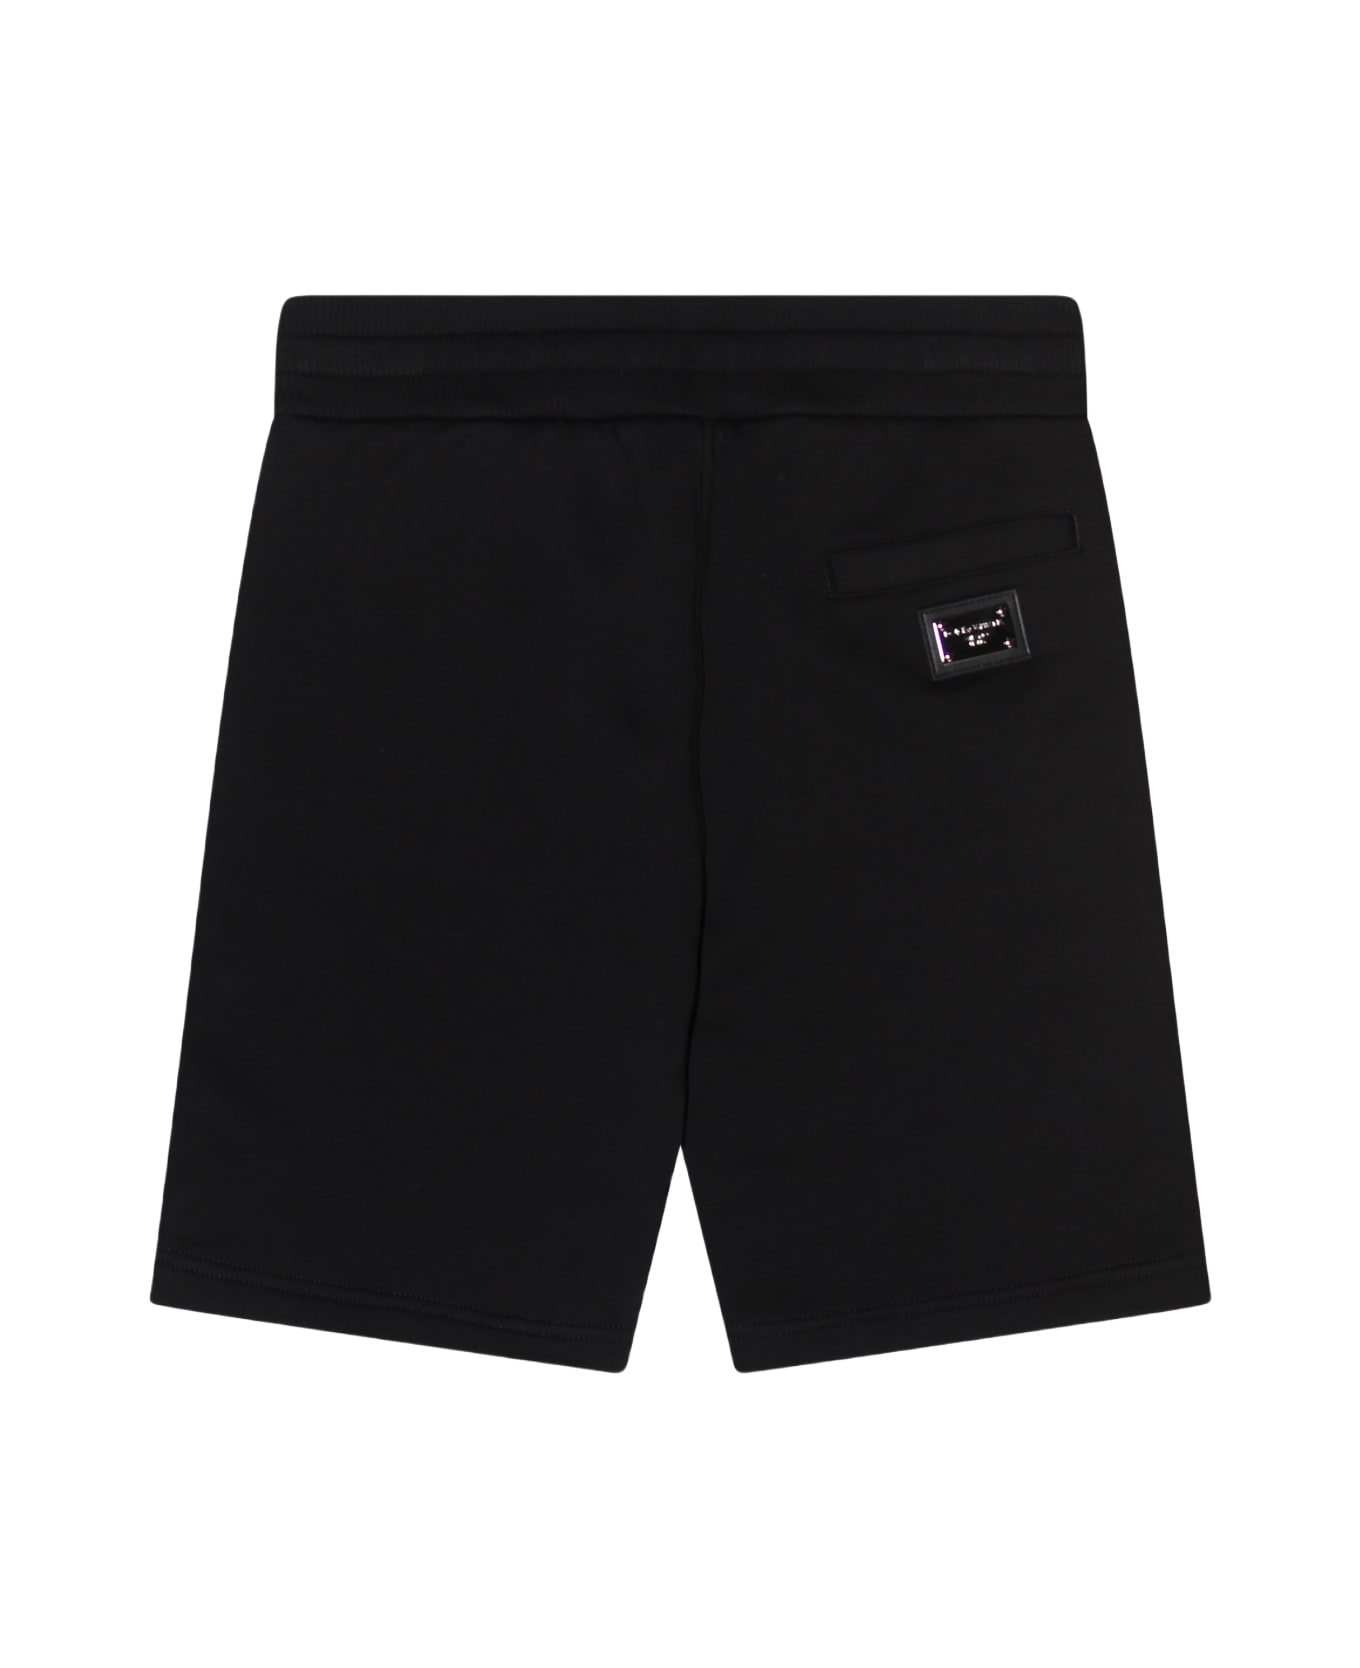 Dolce & Gabbana Black Cotton Shorts - Black